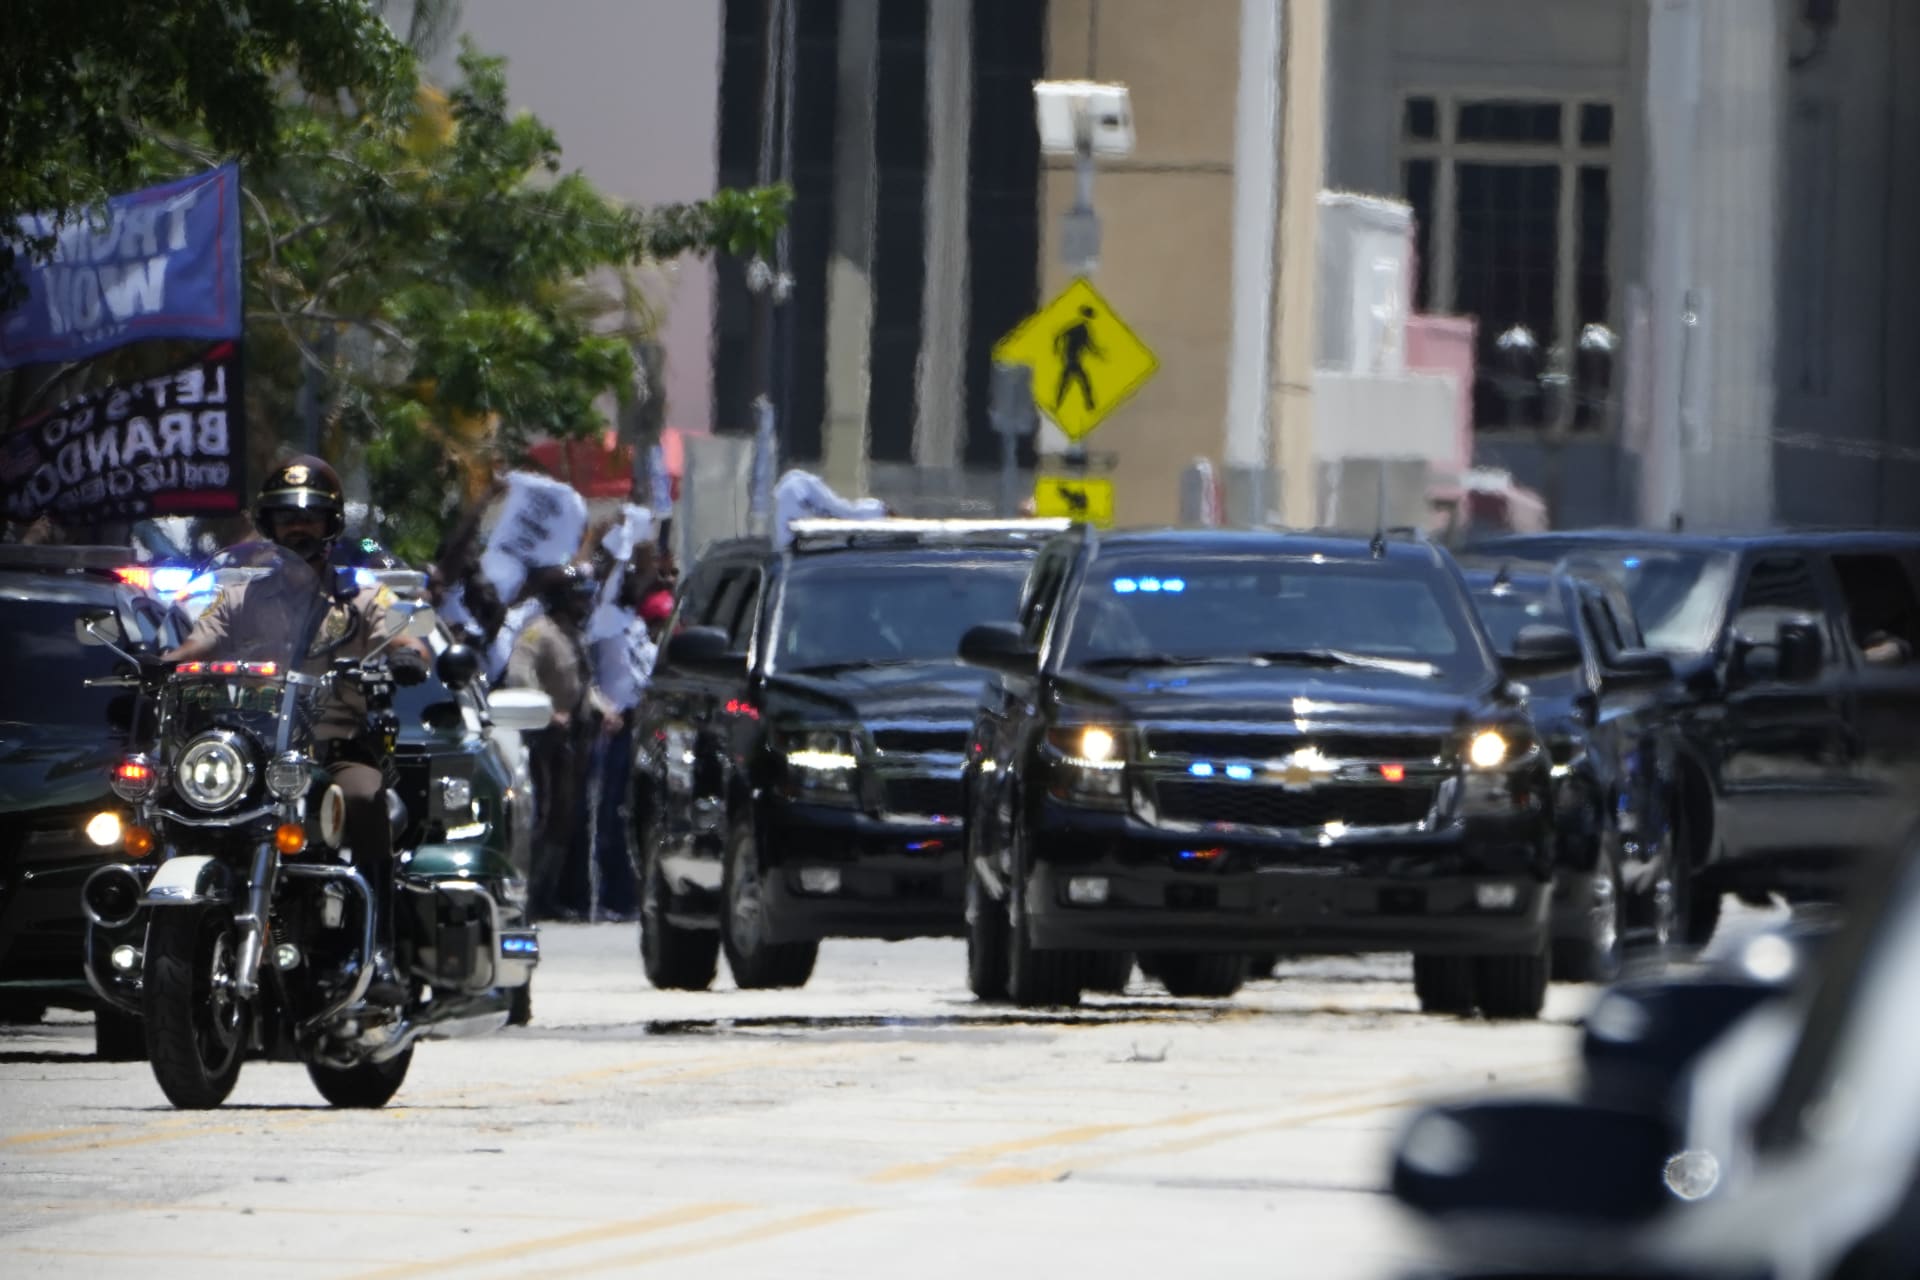 Kolona s Donaldem Trumpem dorazila k budově v soudu v Miami.